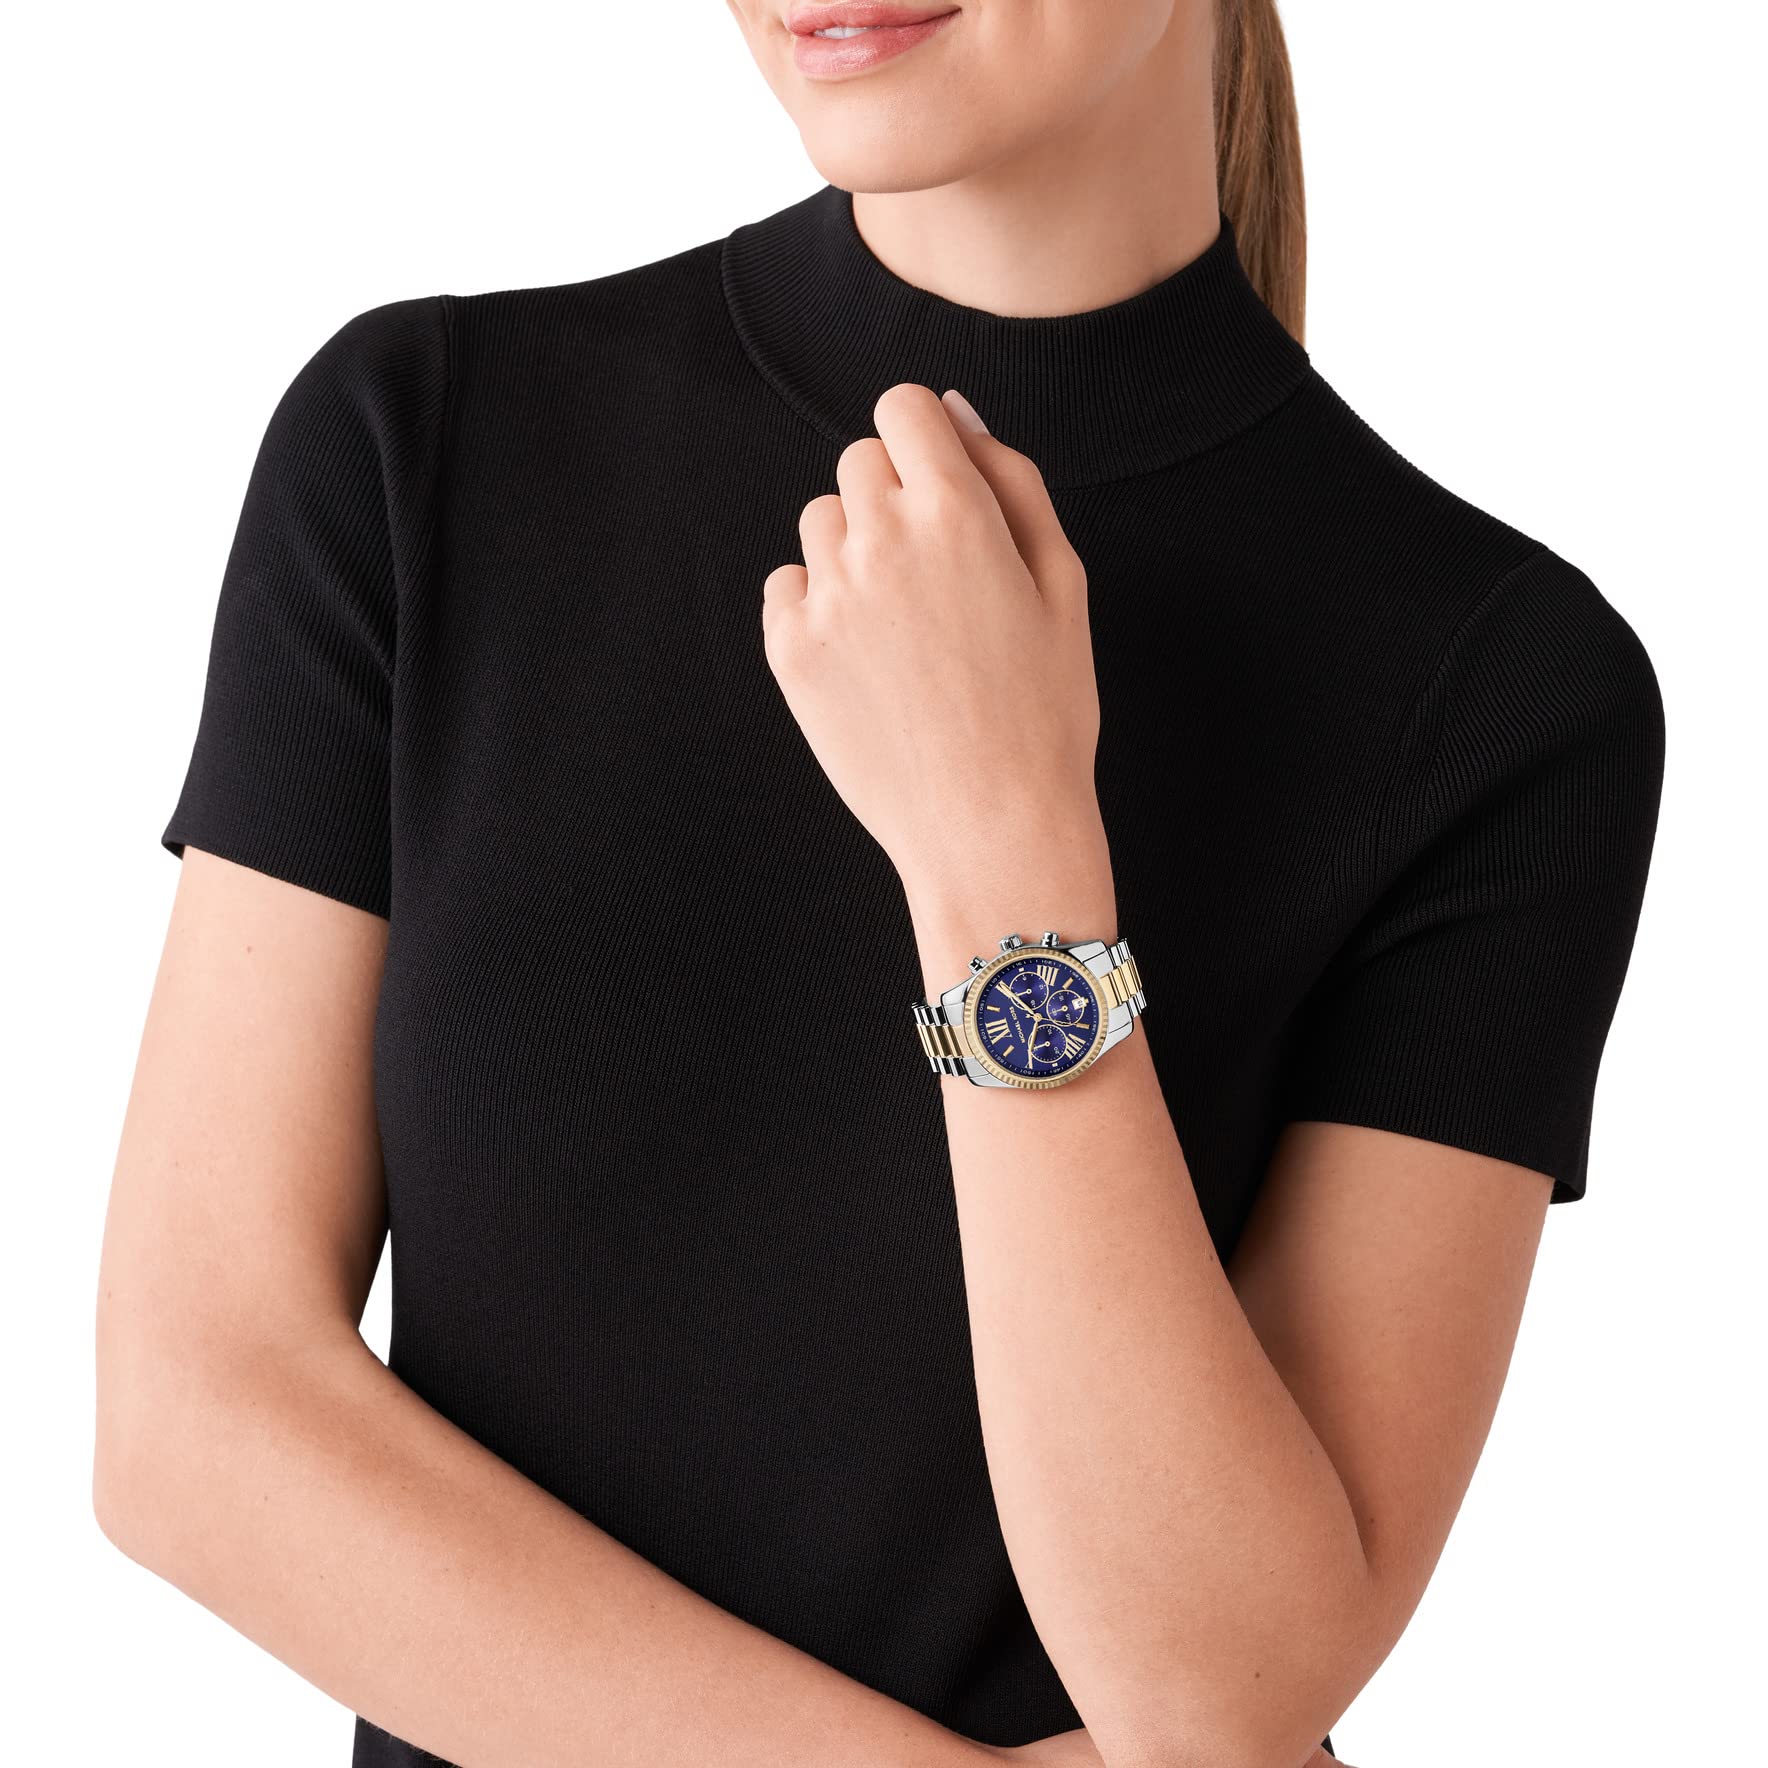 Michael Kors Ladies Lexington Wrist Watch